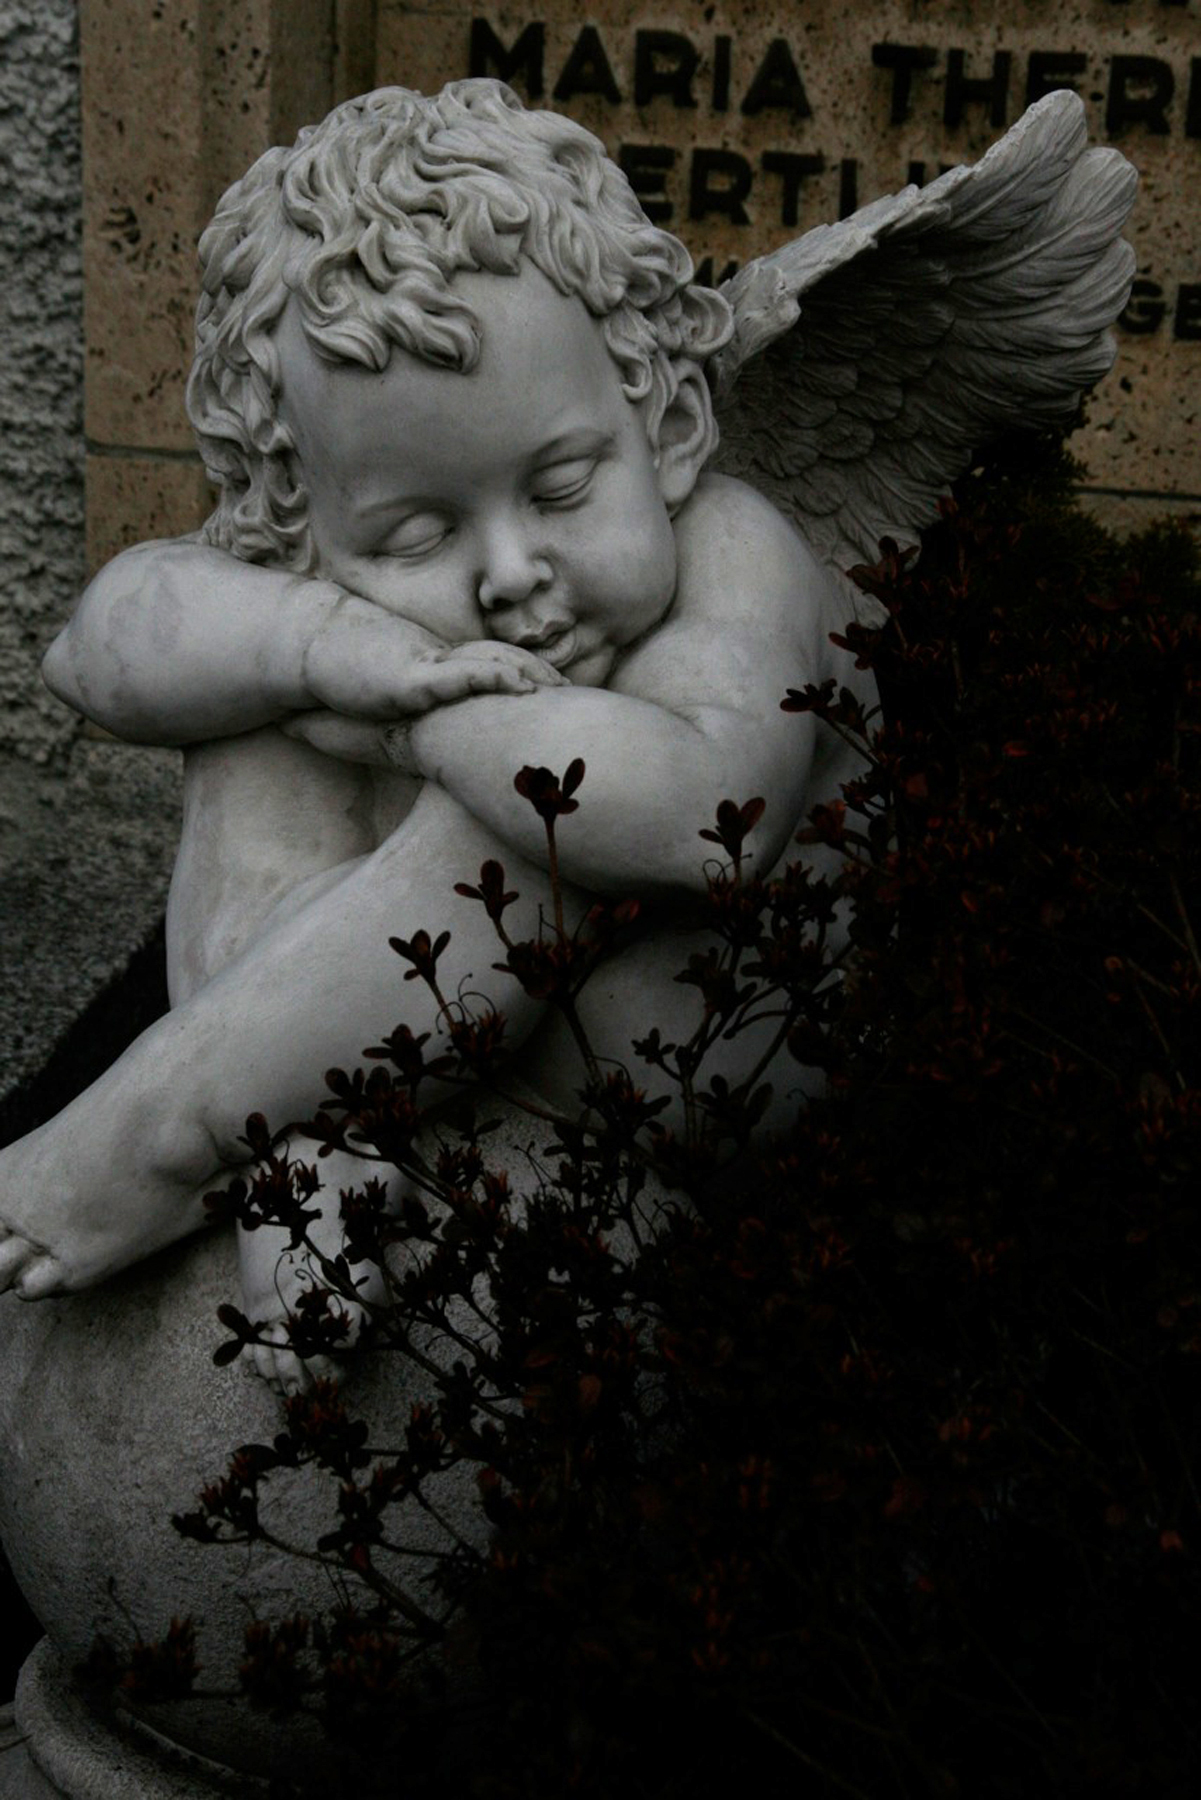 17 Beautiful Angel Photos - Christmas! - The Graphics Fairy